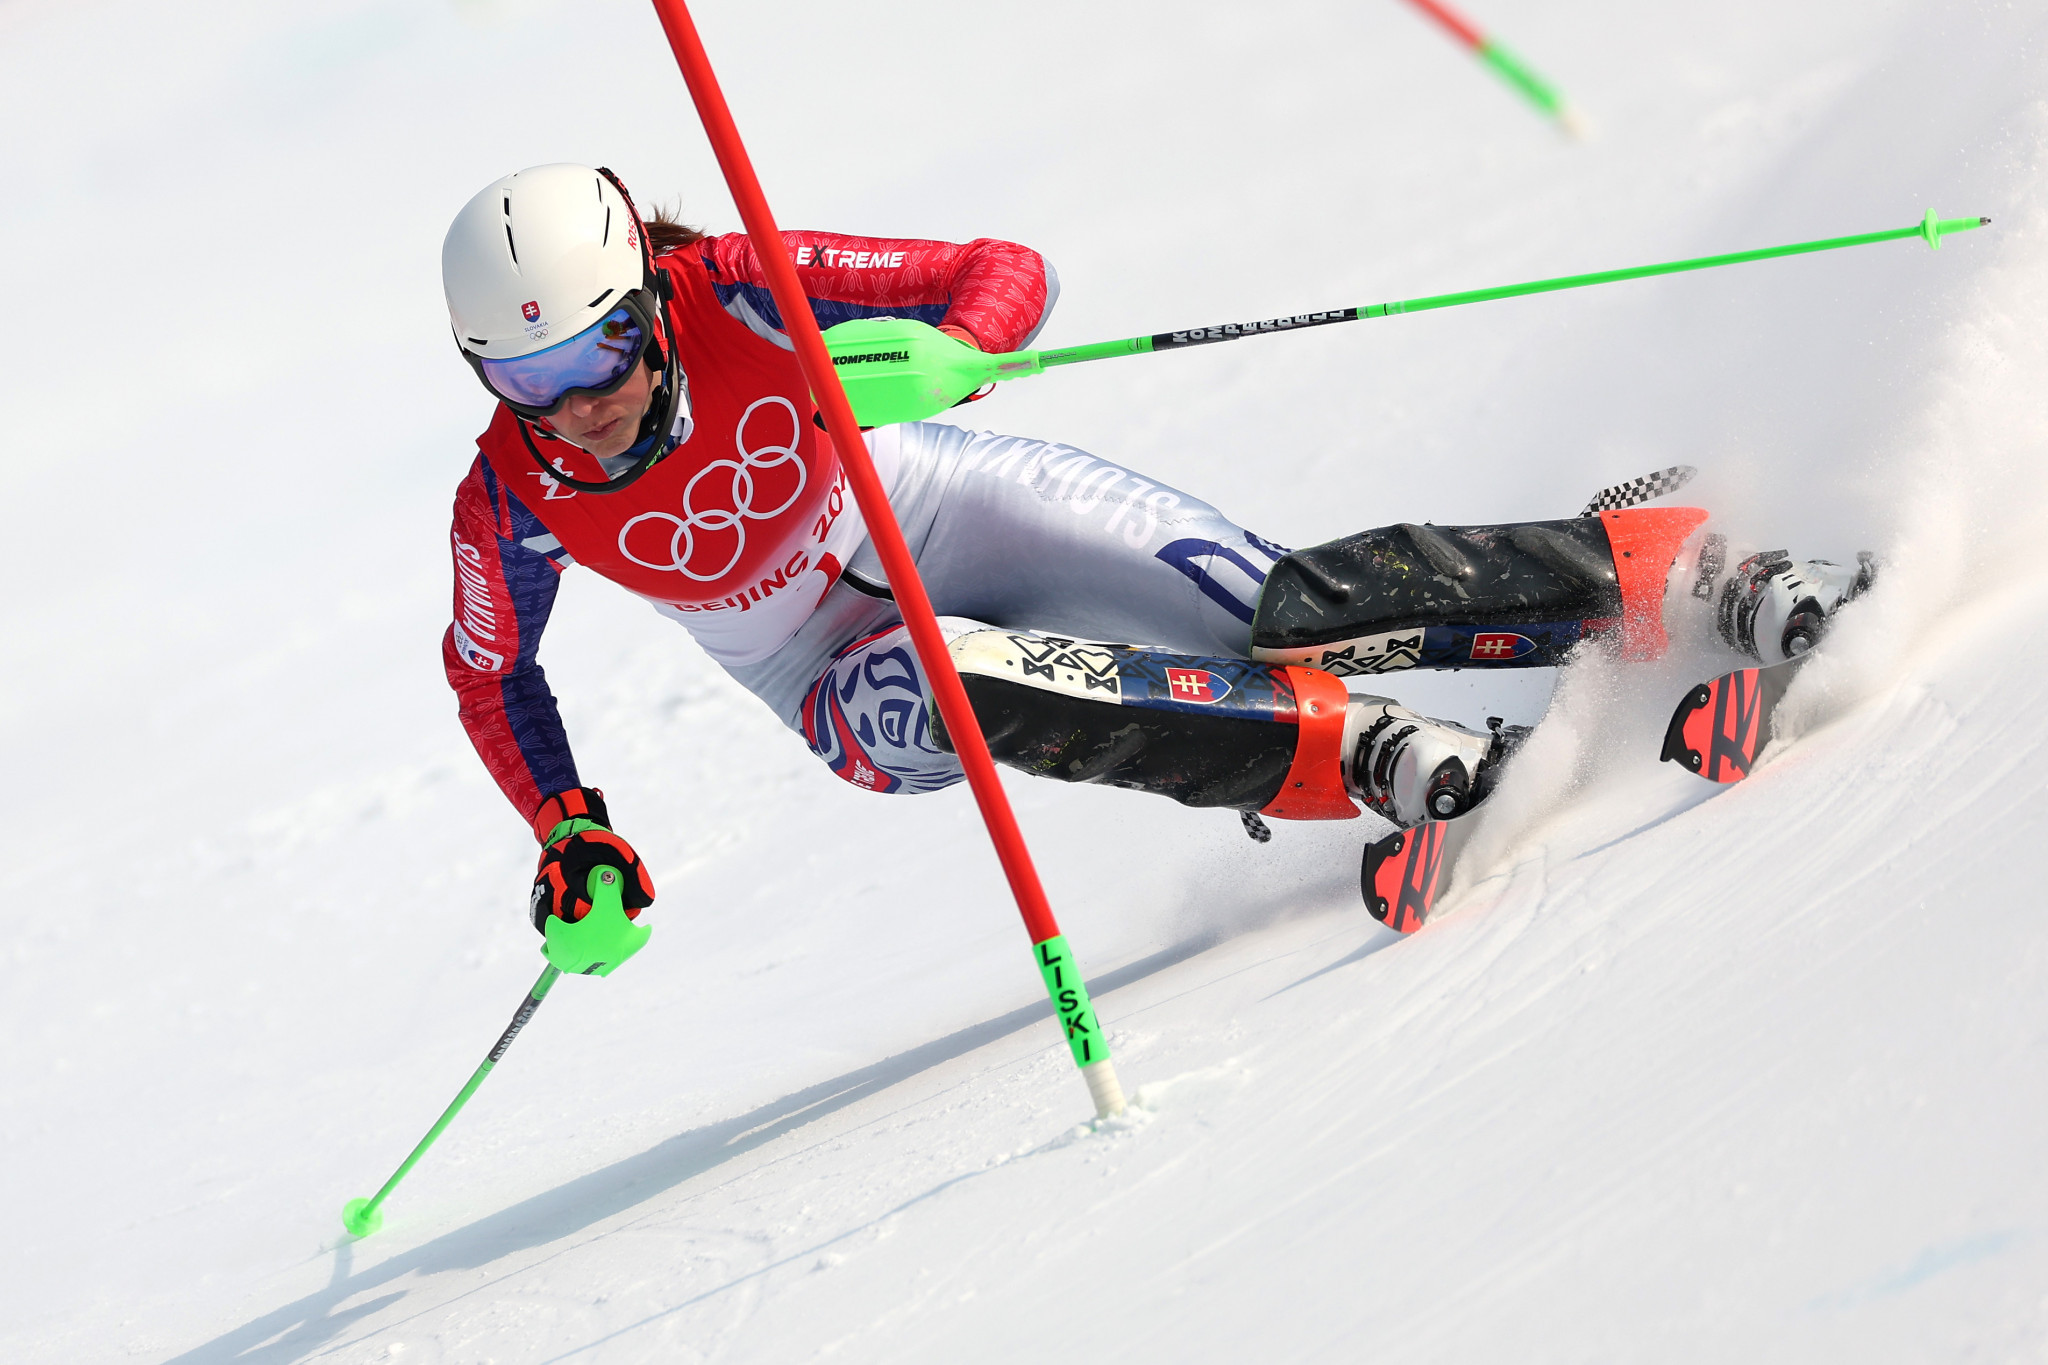 Vlhová earns slalom gold at Beijing 2022 as Shiffrin skis out again